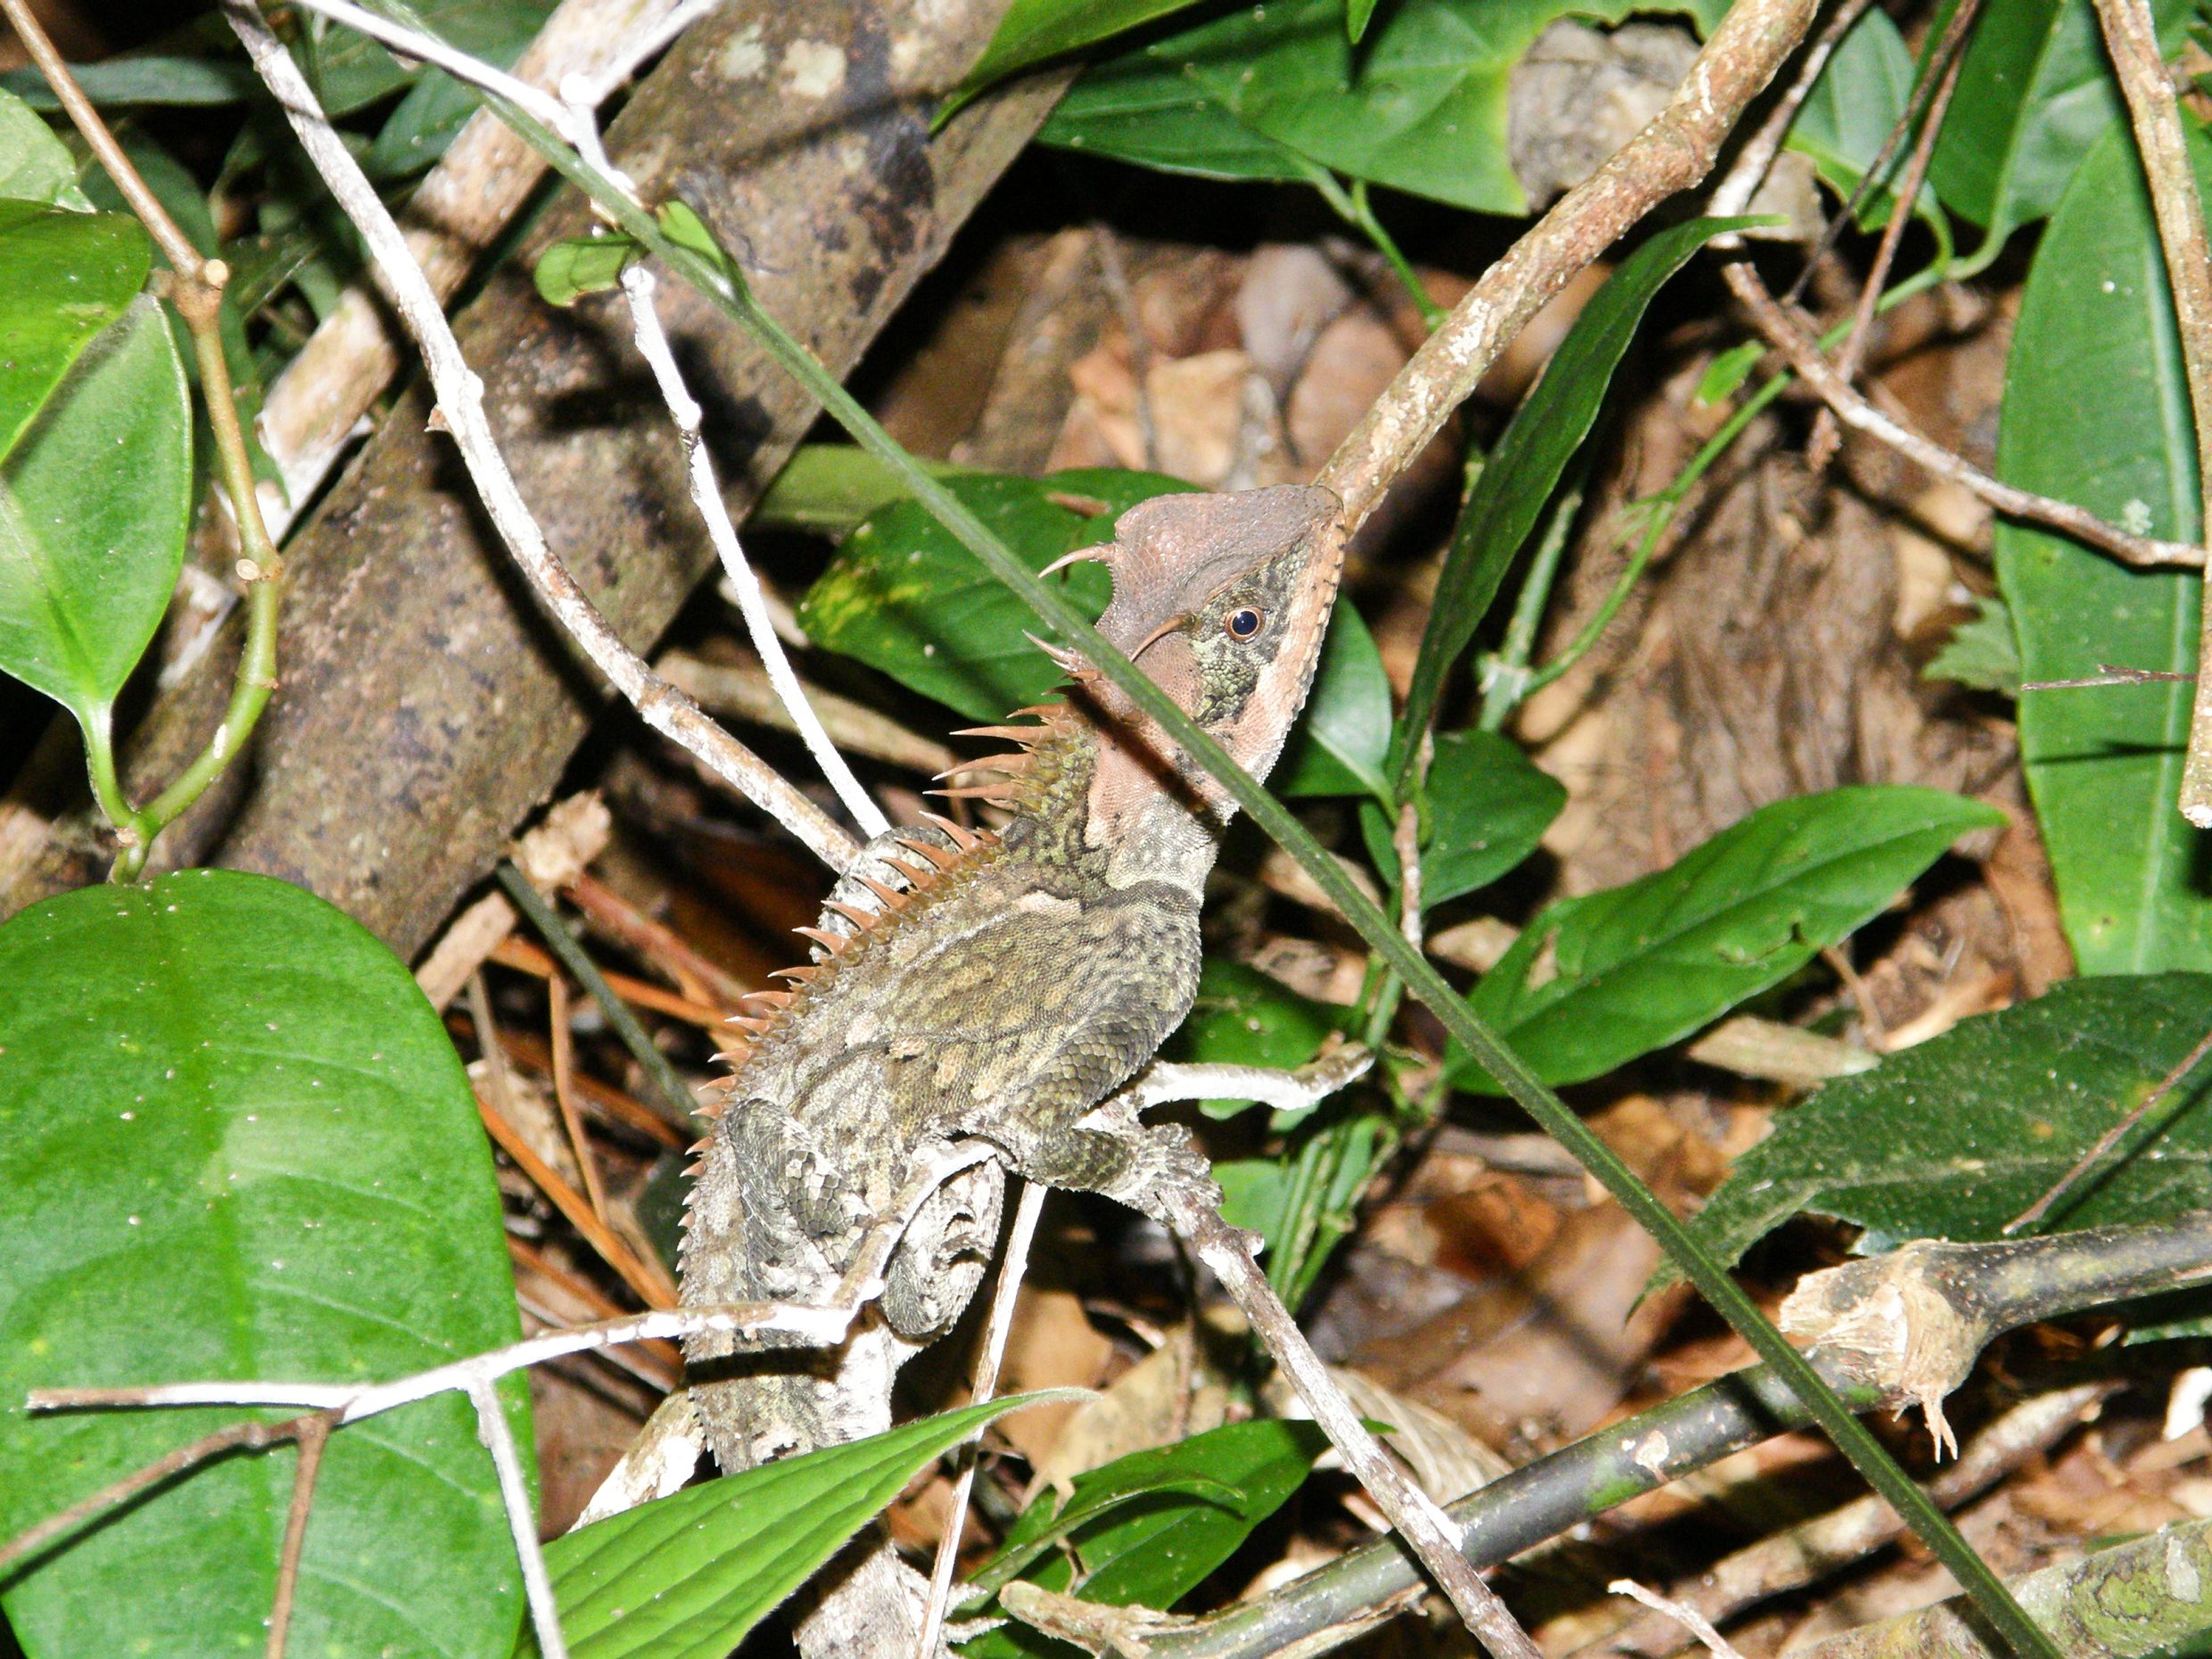 Lizard in forest, Bokor National Park